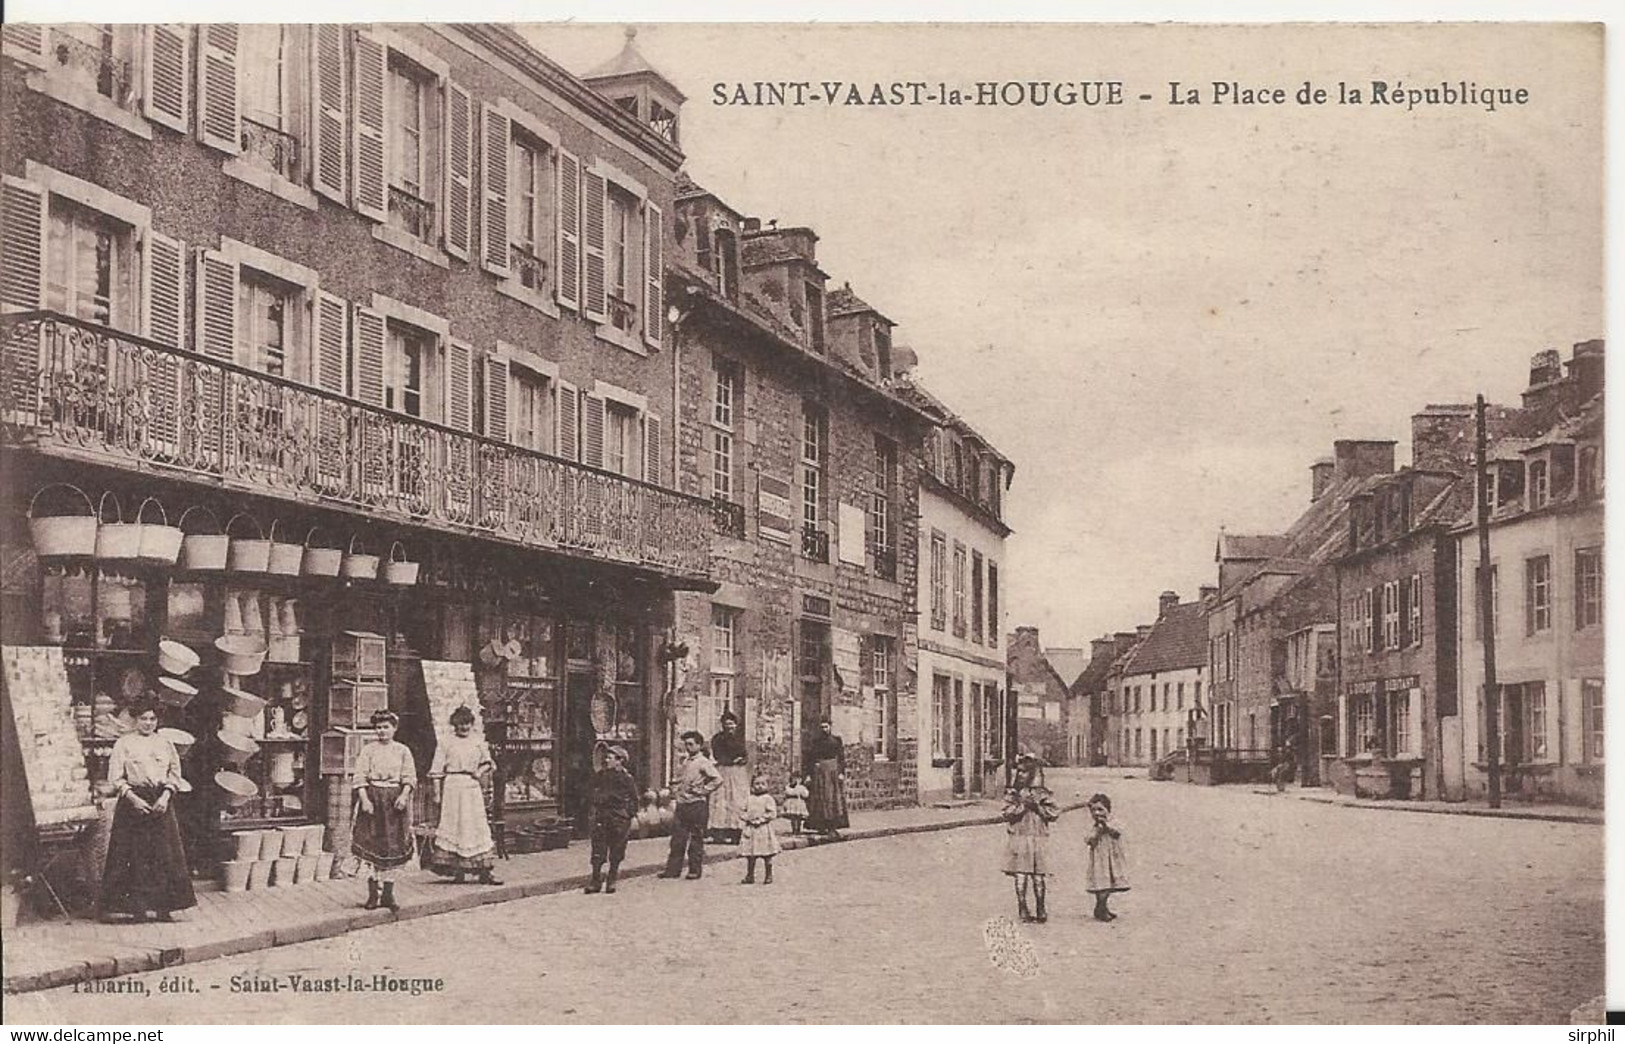 Carte Postale Ancienne De Saint Vaaste La Hougue La Place De La République - Saint Vaast La Hougue